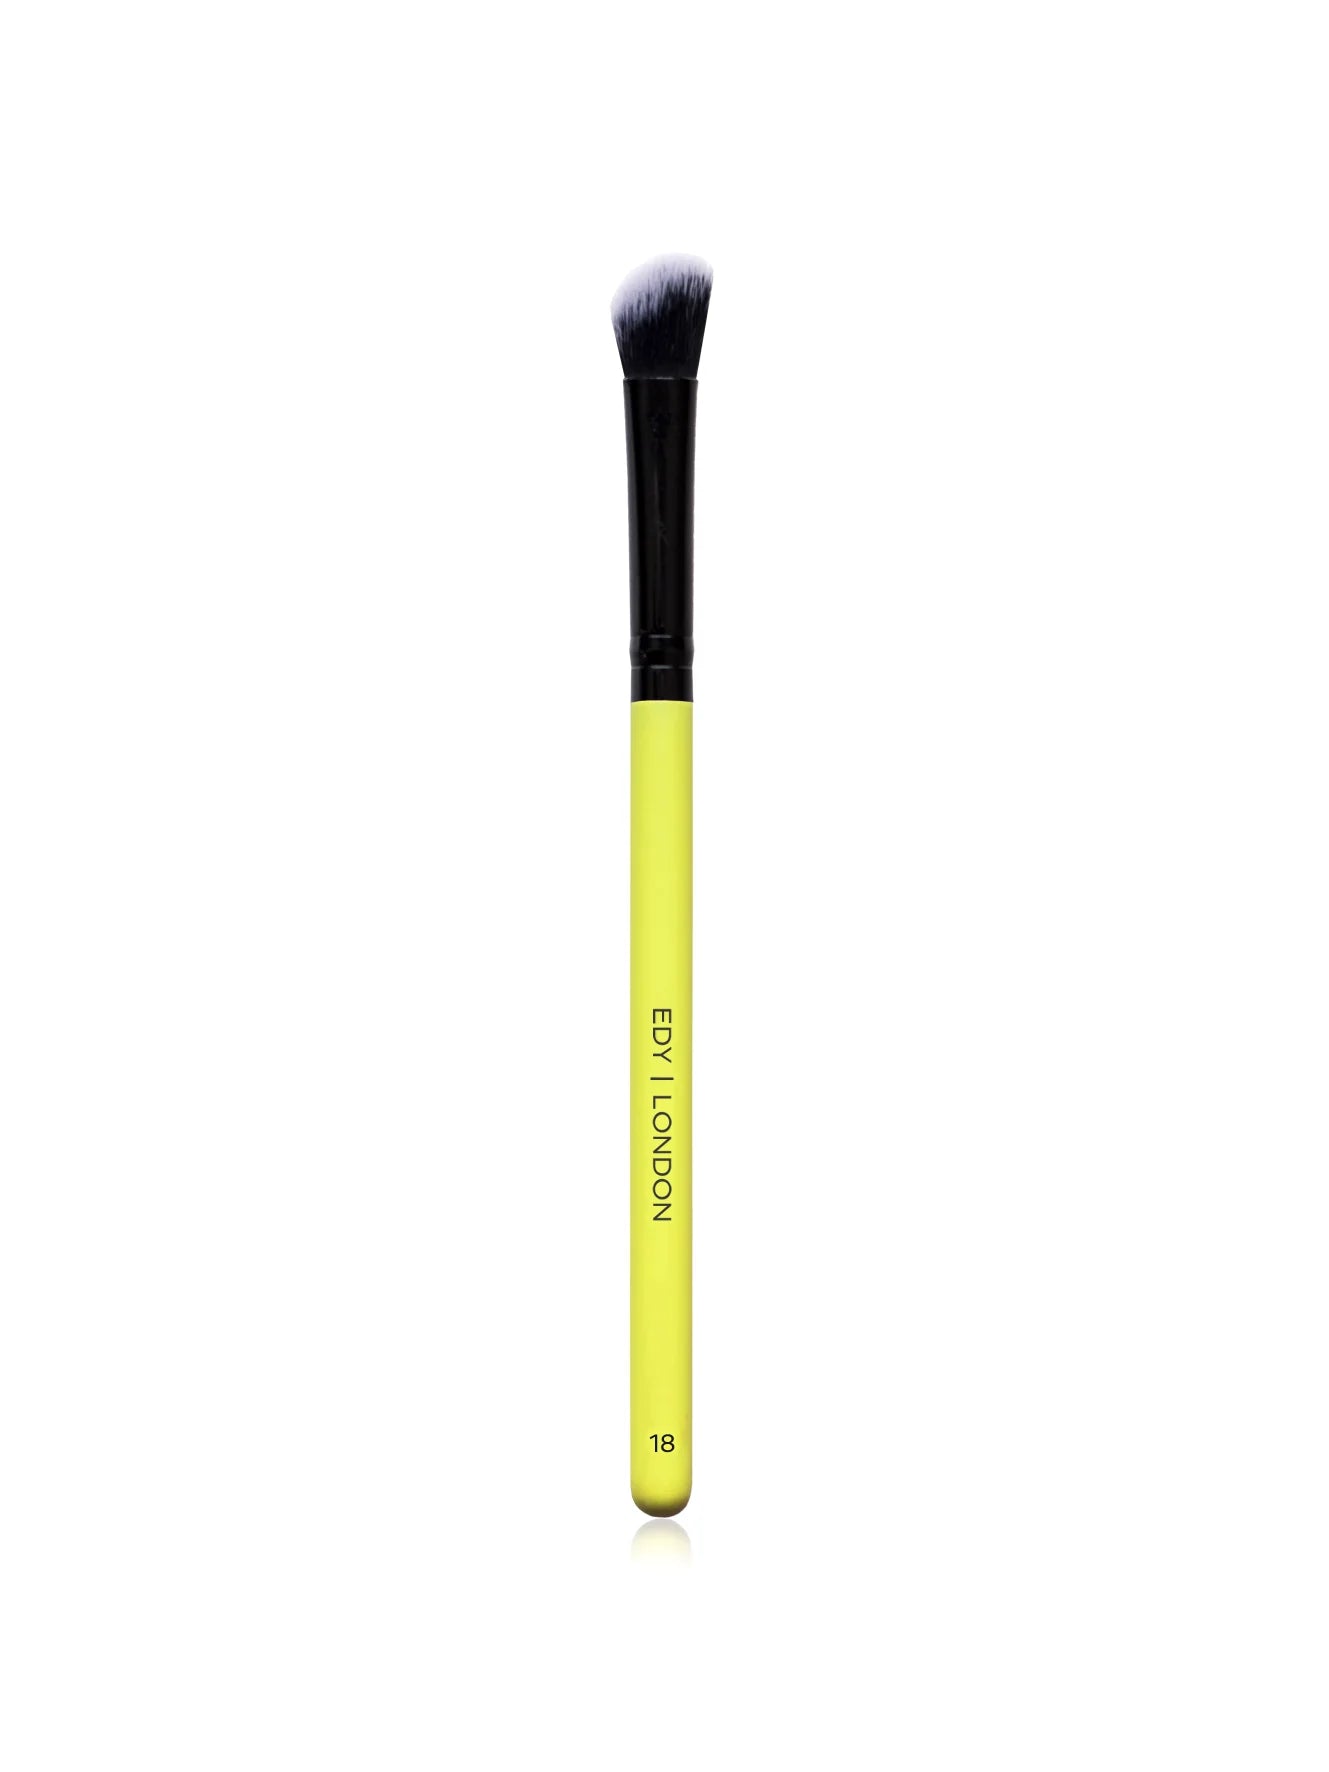 Medium Angled Blender Brush 18 Make-up Brush EDY LONDON Lemon   - EDY LONDON PRODUCTS UK - The Best Makeup Brushes - shop.edy.london